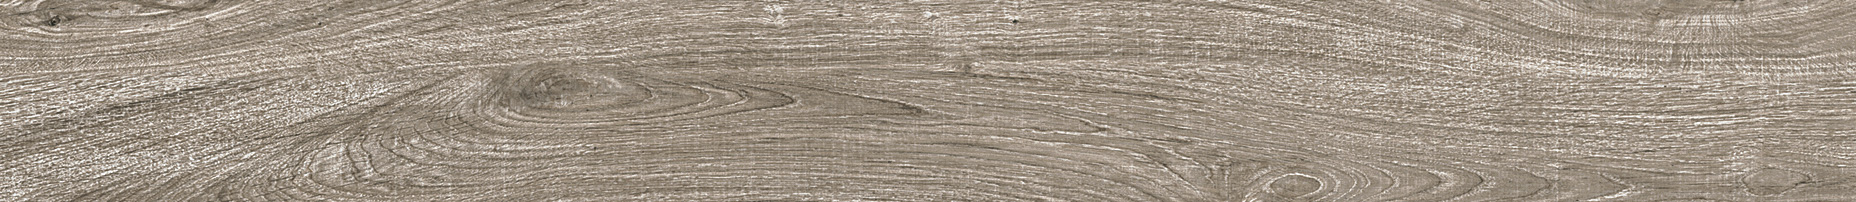 carrelage-sol-gresp-cover-irati-19-5x180-5-6mm-1-40m2-encina-0